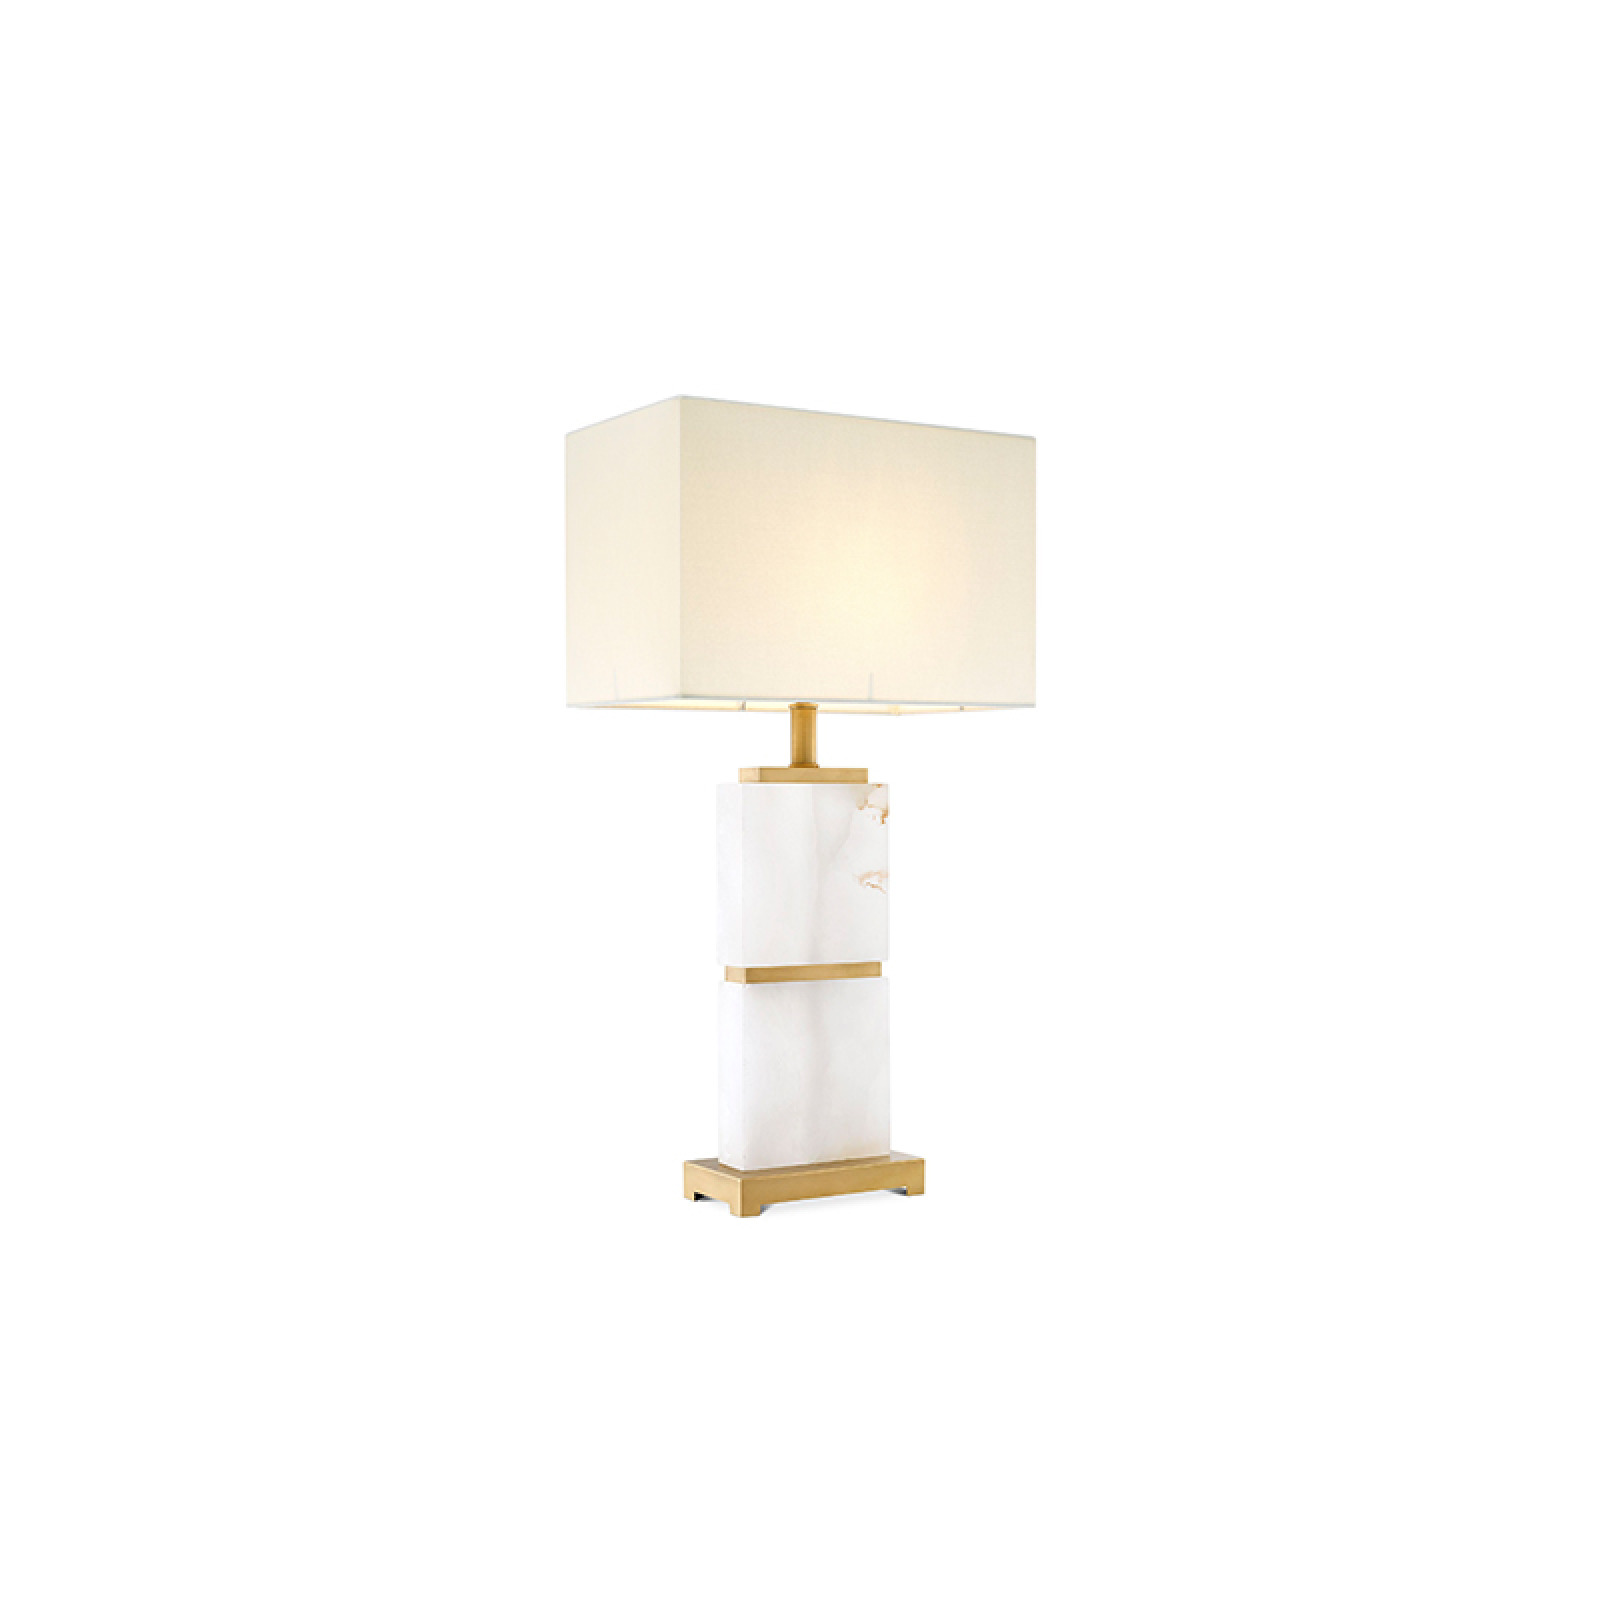 Robbins table lamp